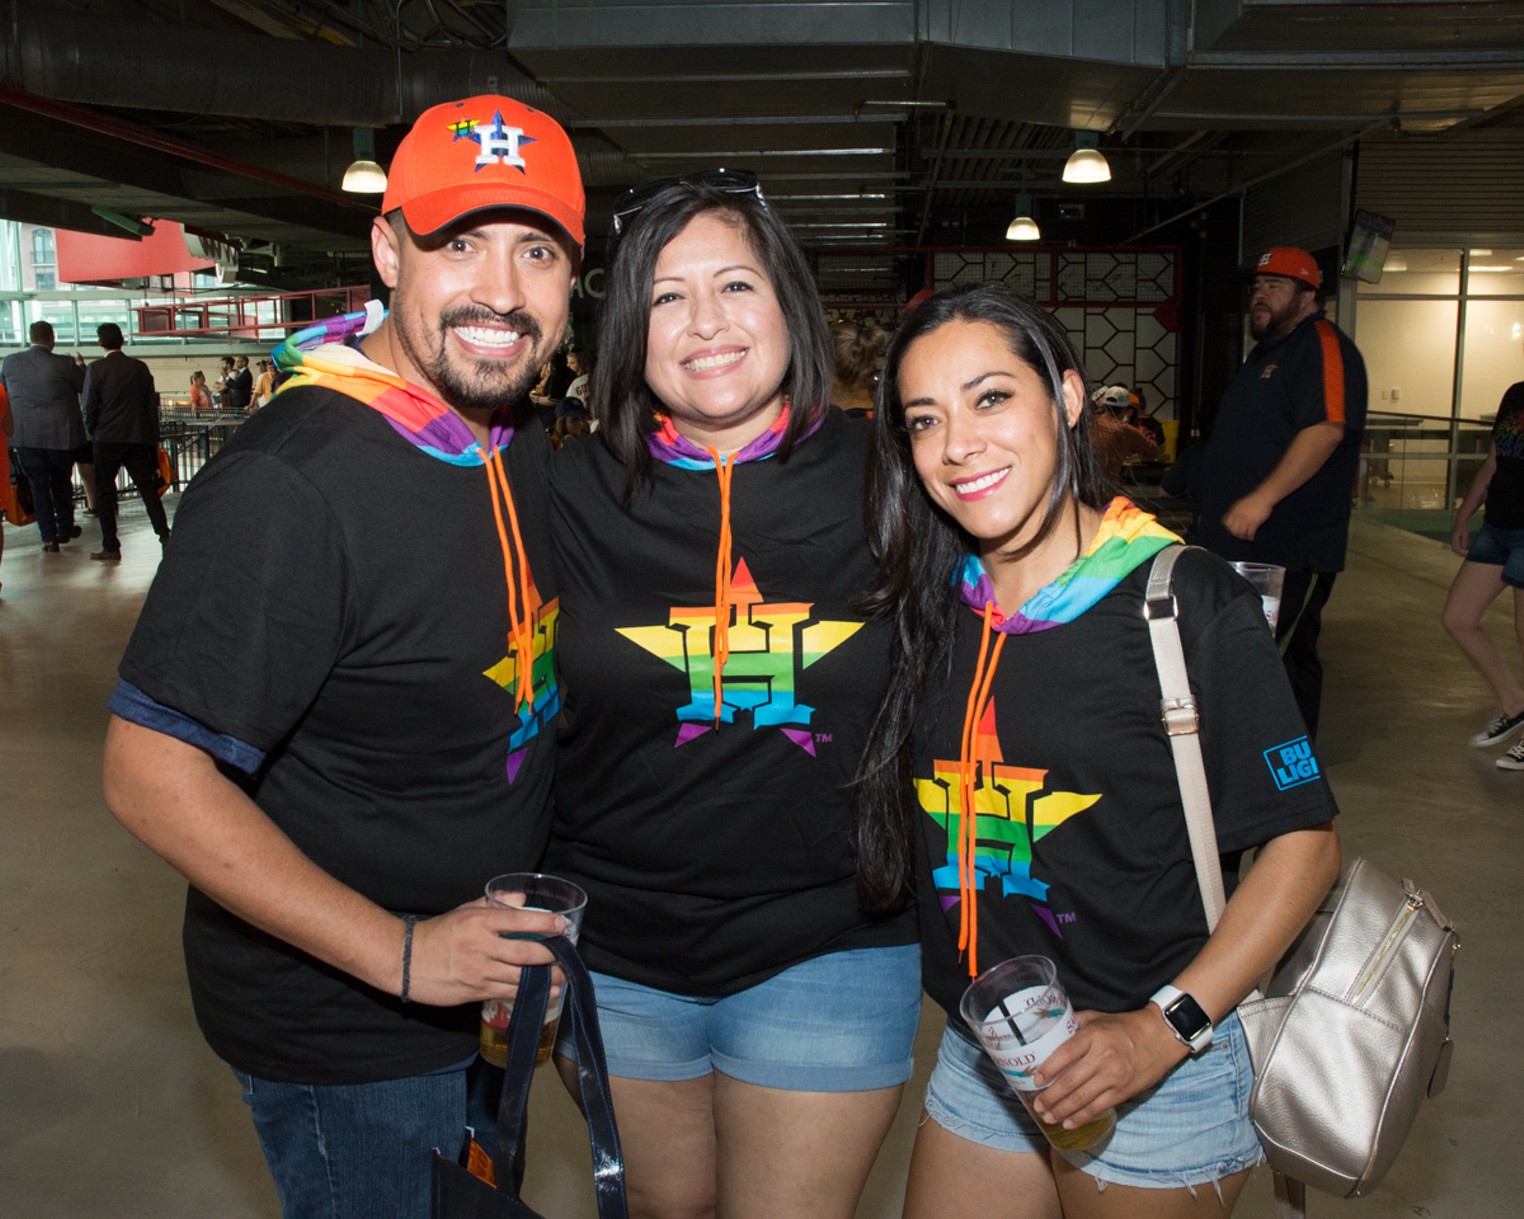 LGBTQ Pride Night at the Astros